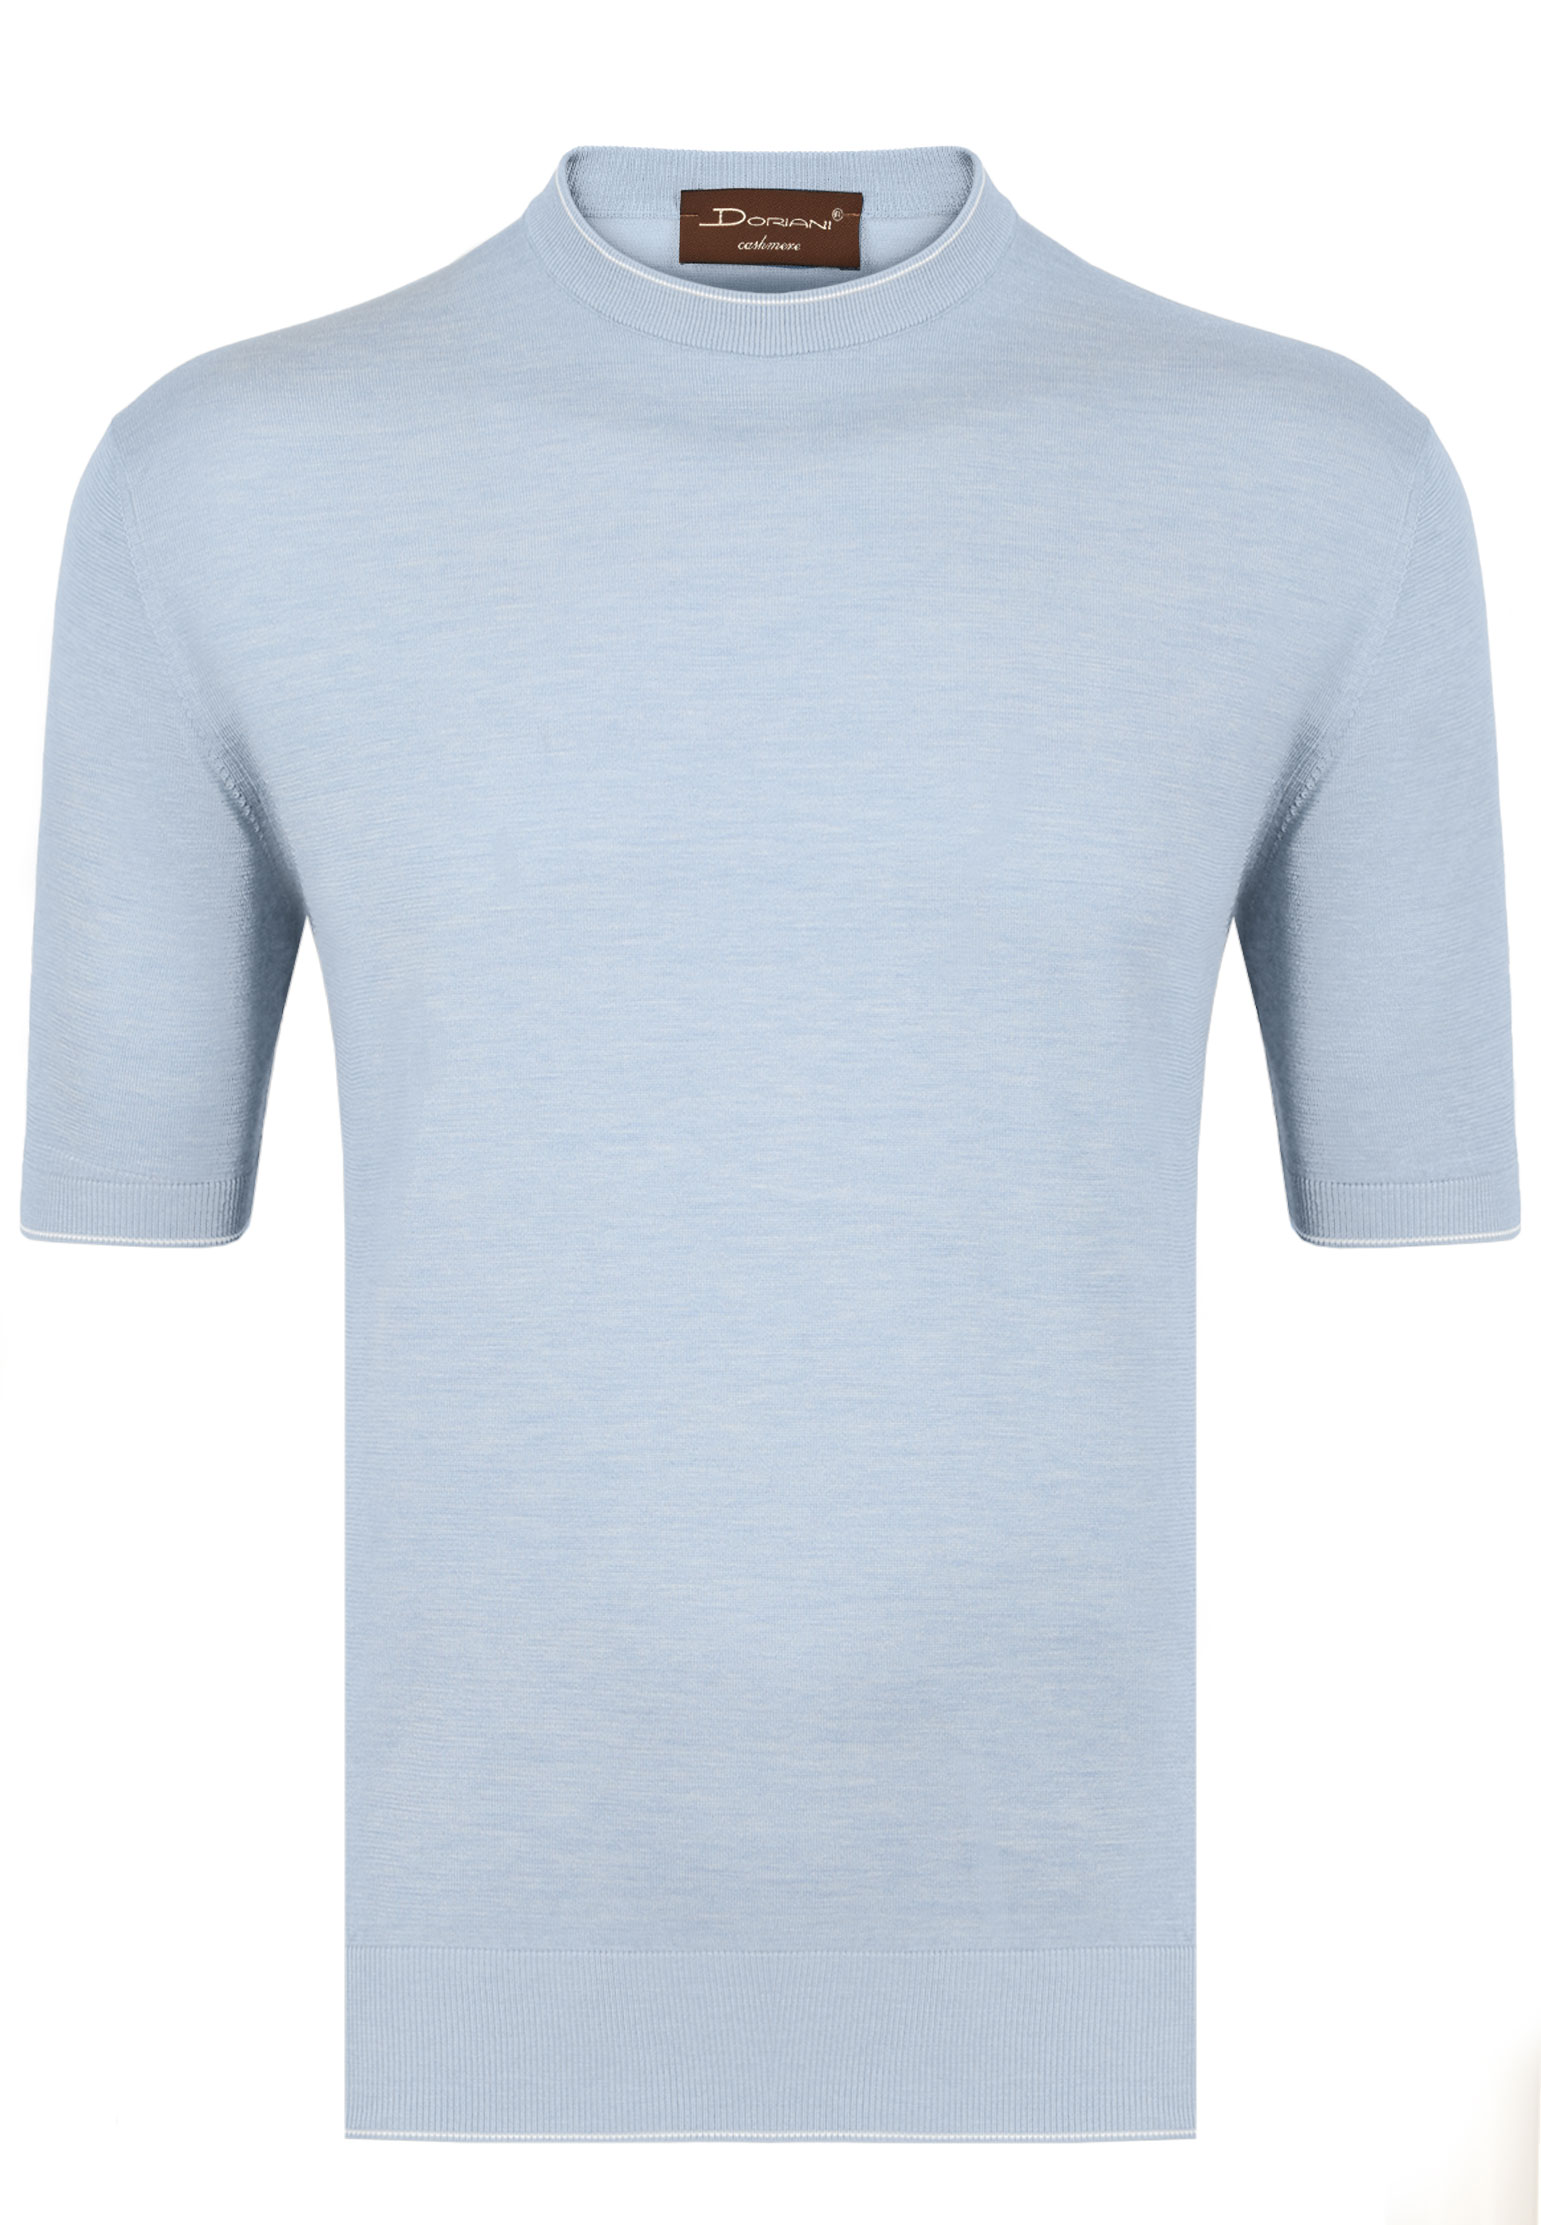 Пуловер DORIANI Голубой, размер 48 178348 - фото 1